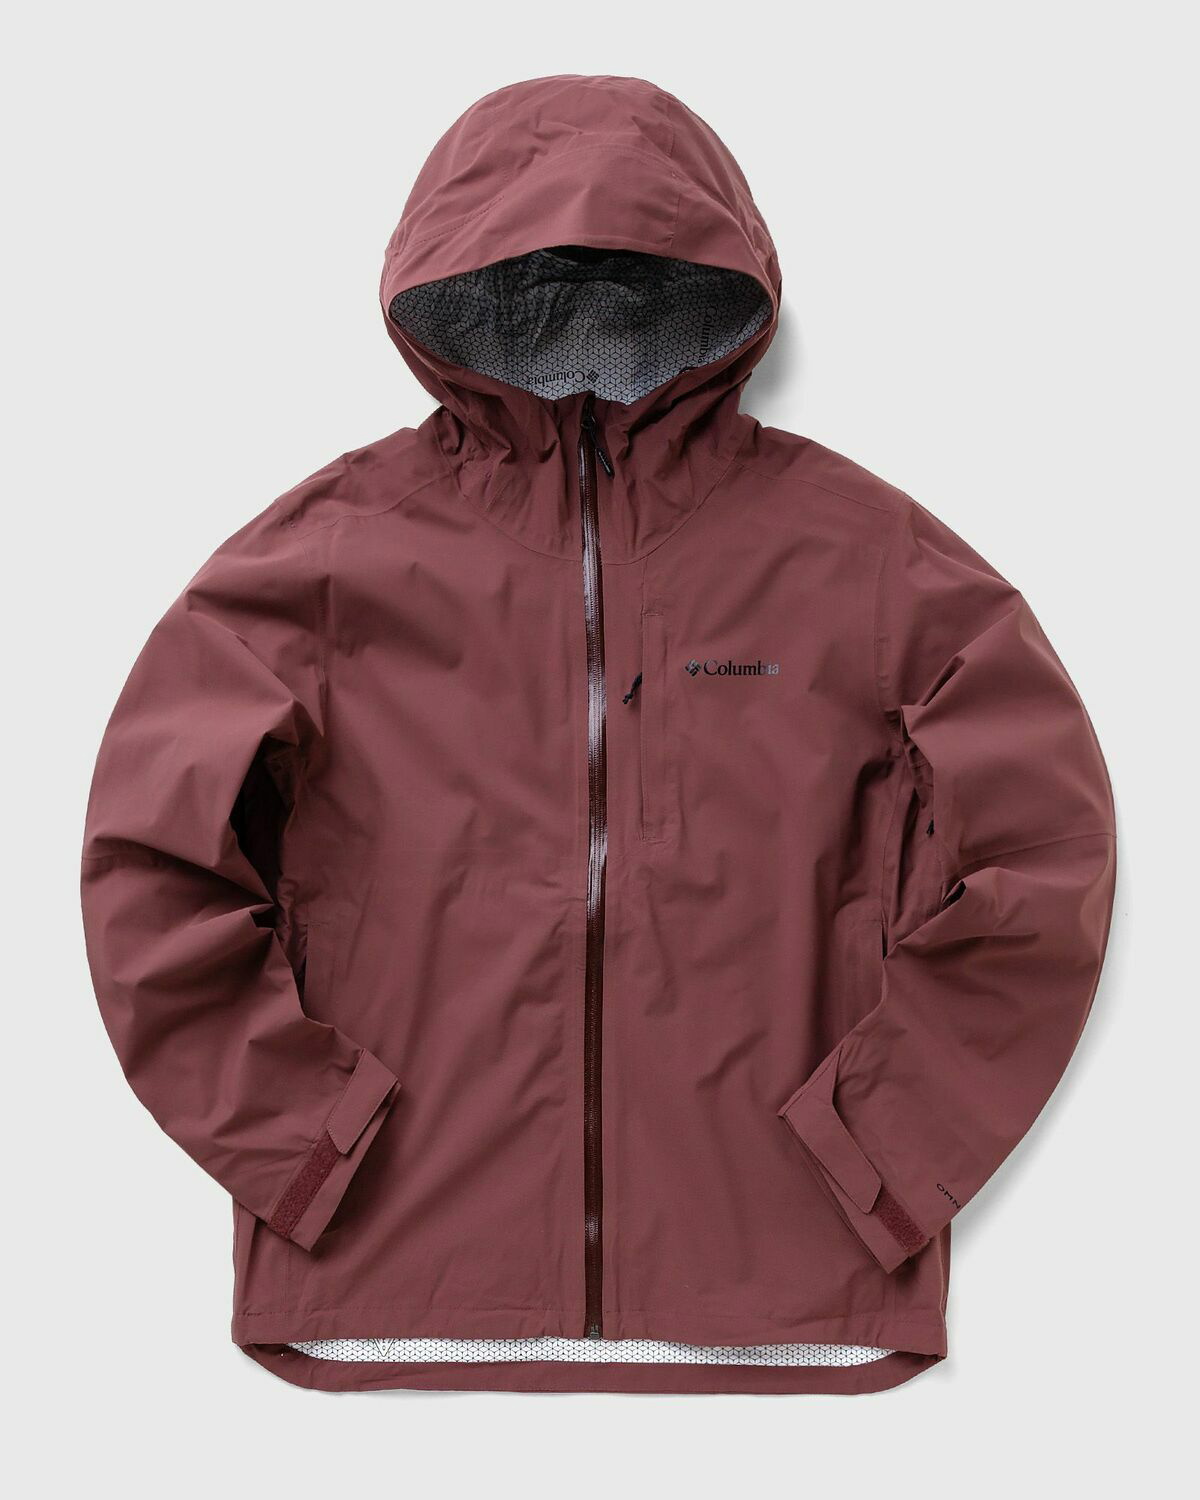 Men's Columbia Omni Shield Jacket  Jackets, Columbia, Columbia jacket